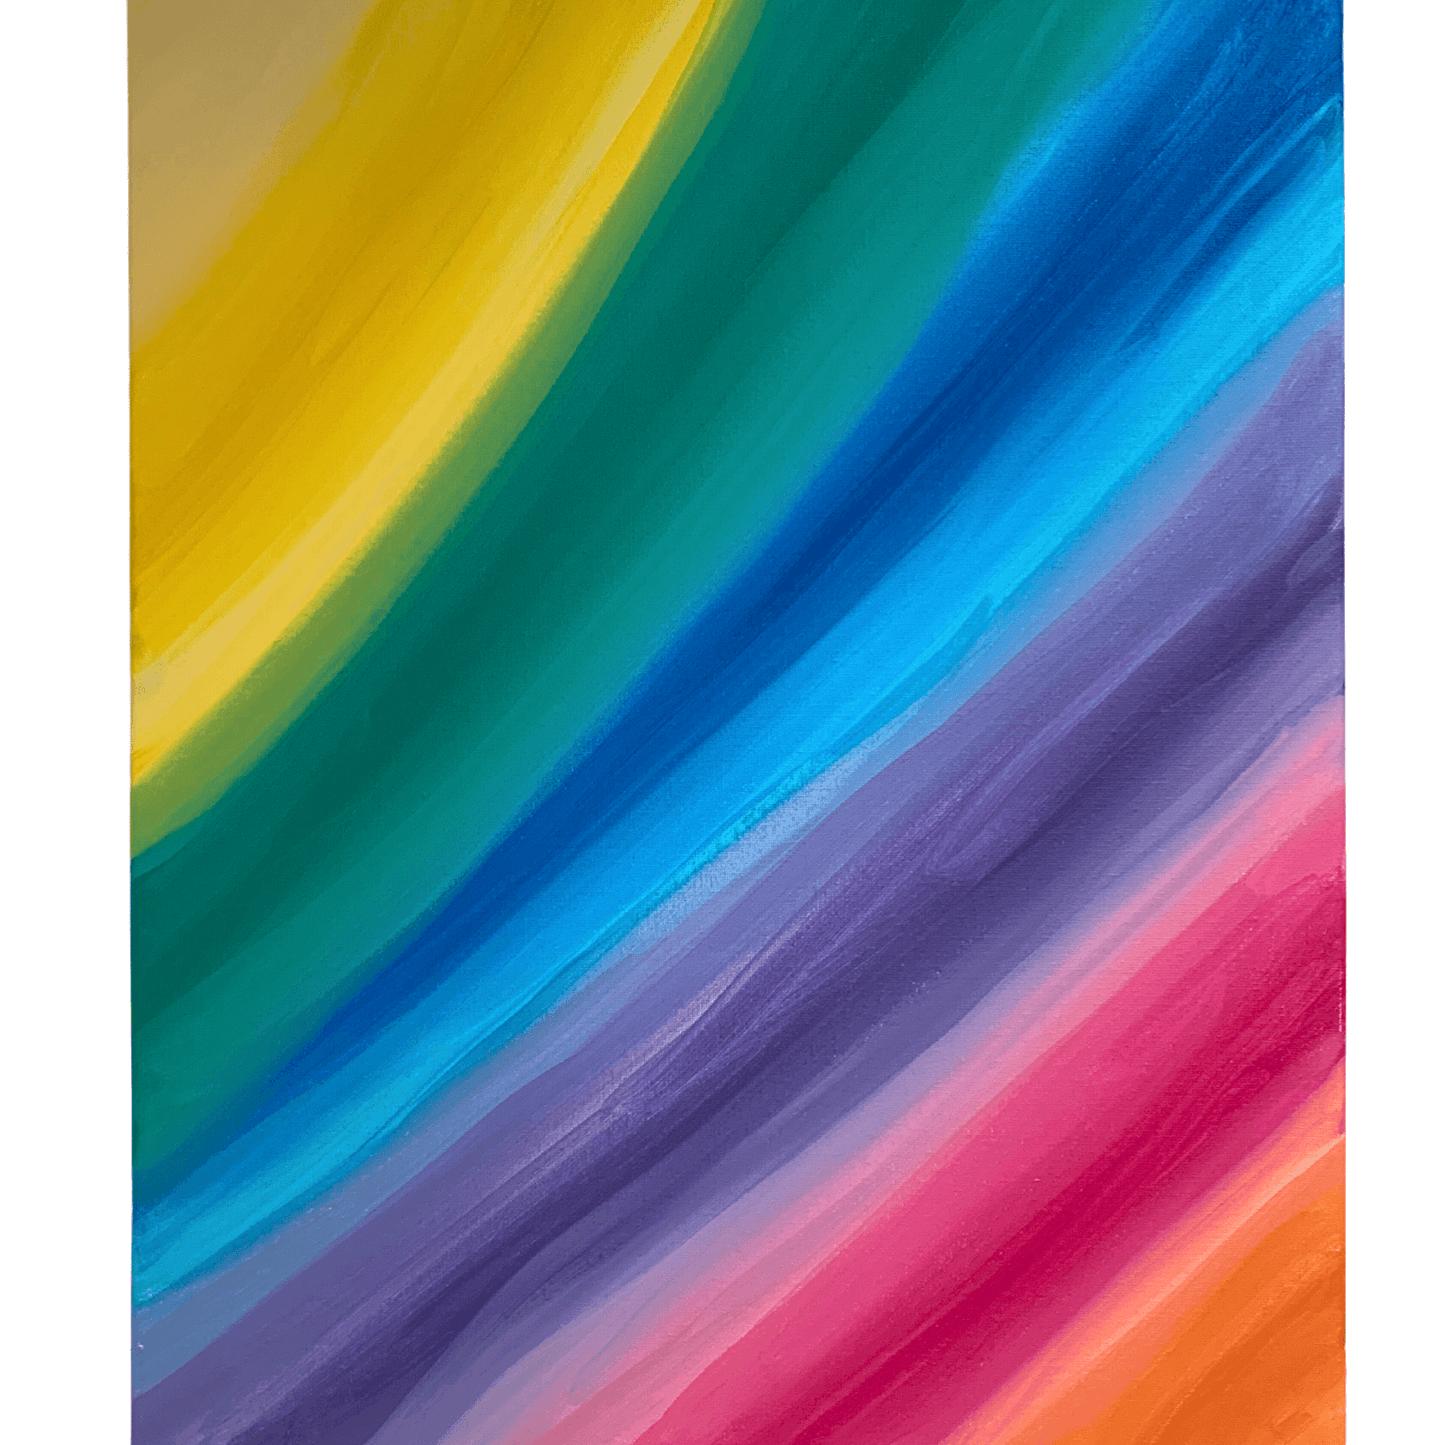 RAINBOW BRIGHT Acrylic Art Abstract 16x20 inch Canvas